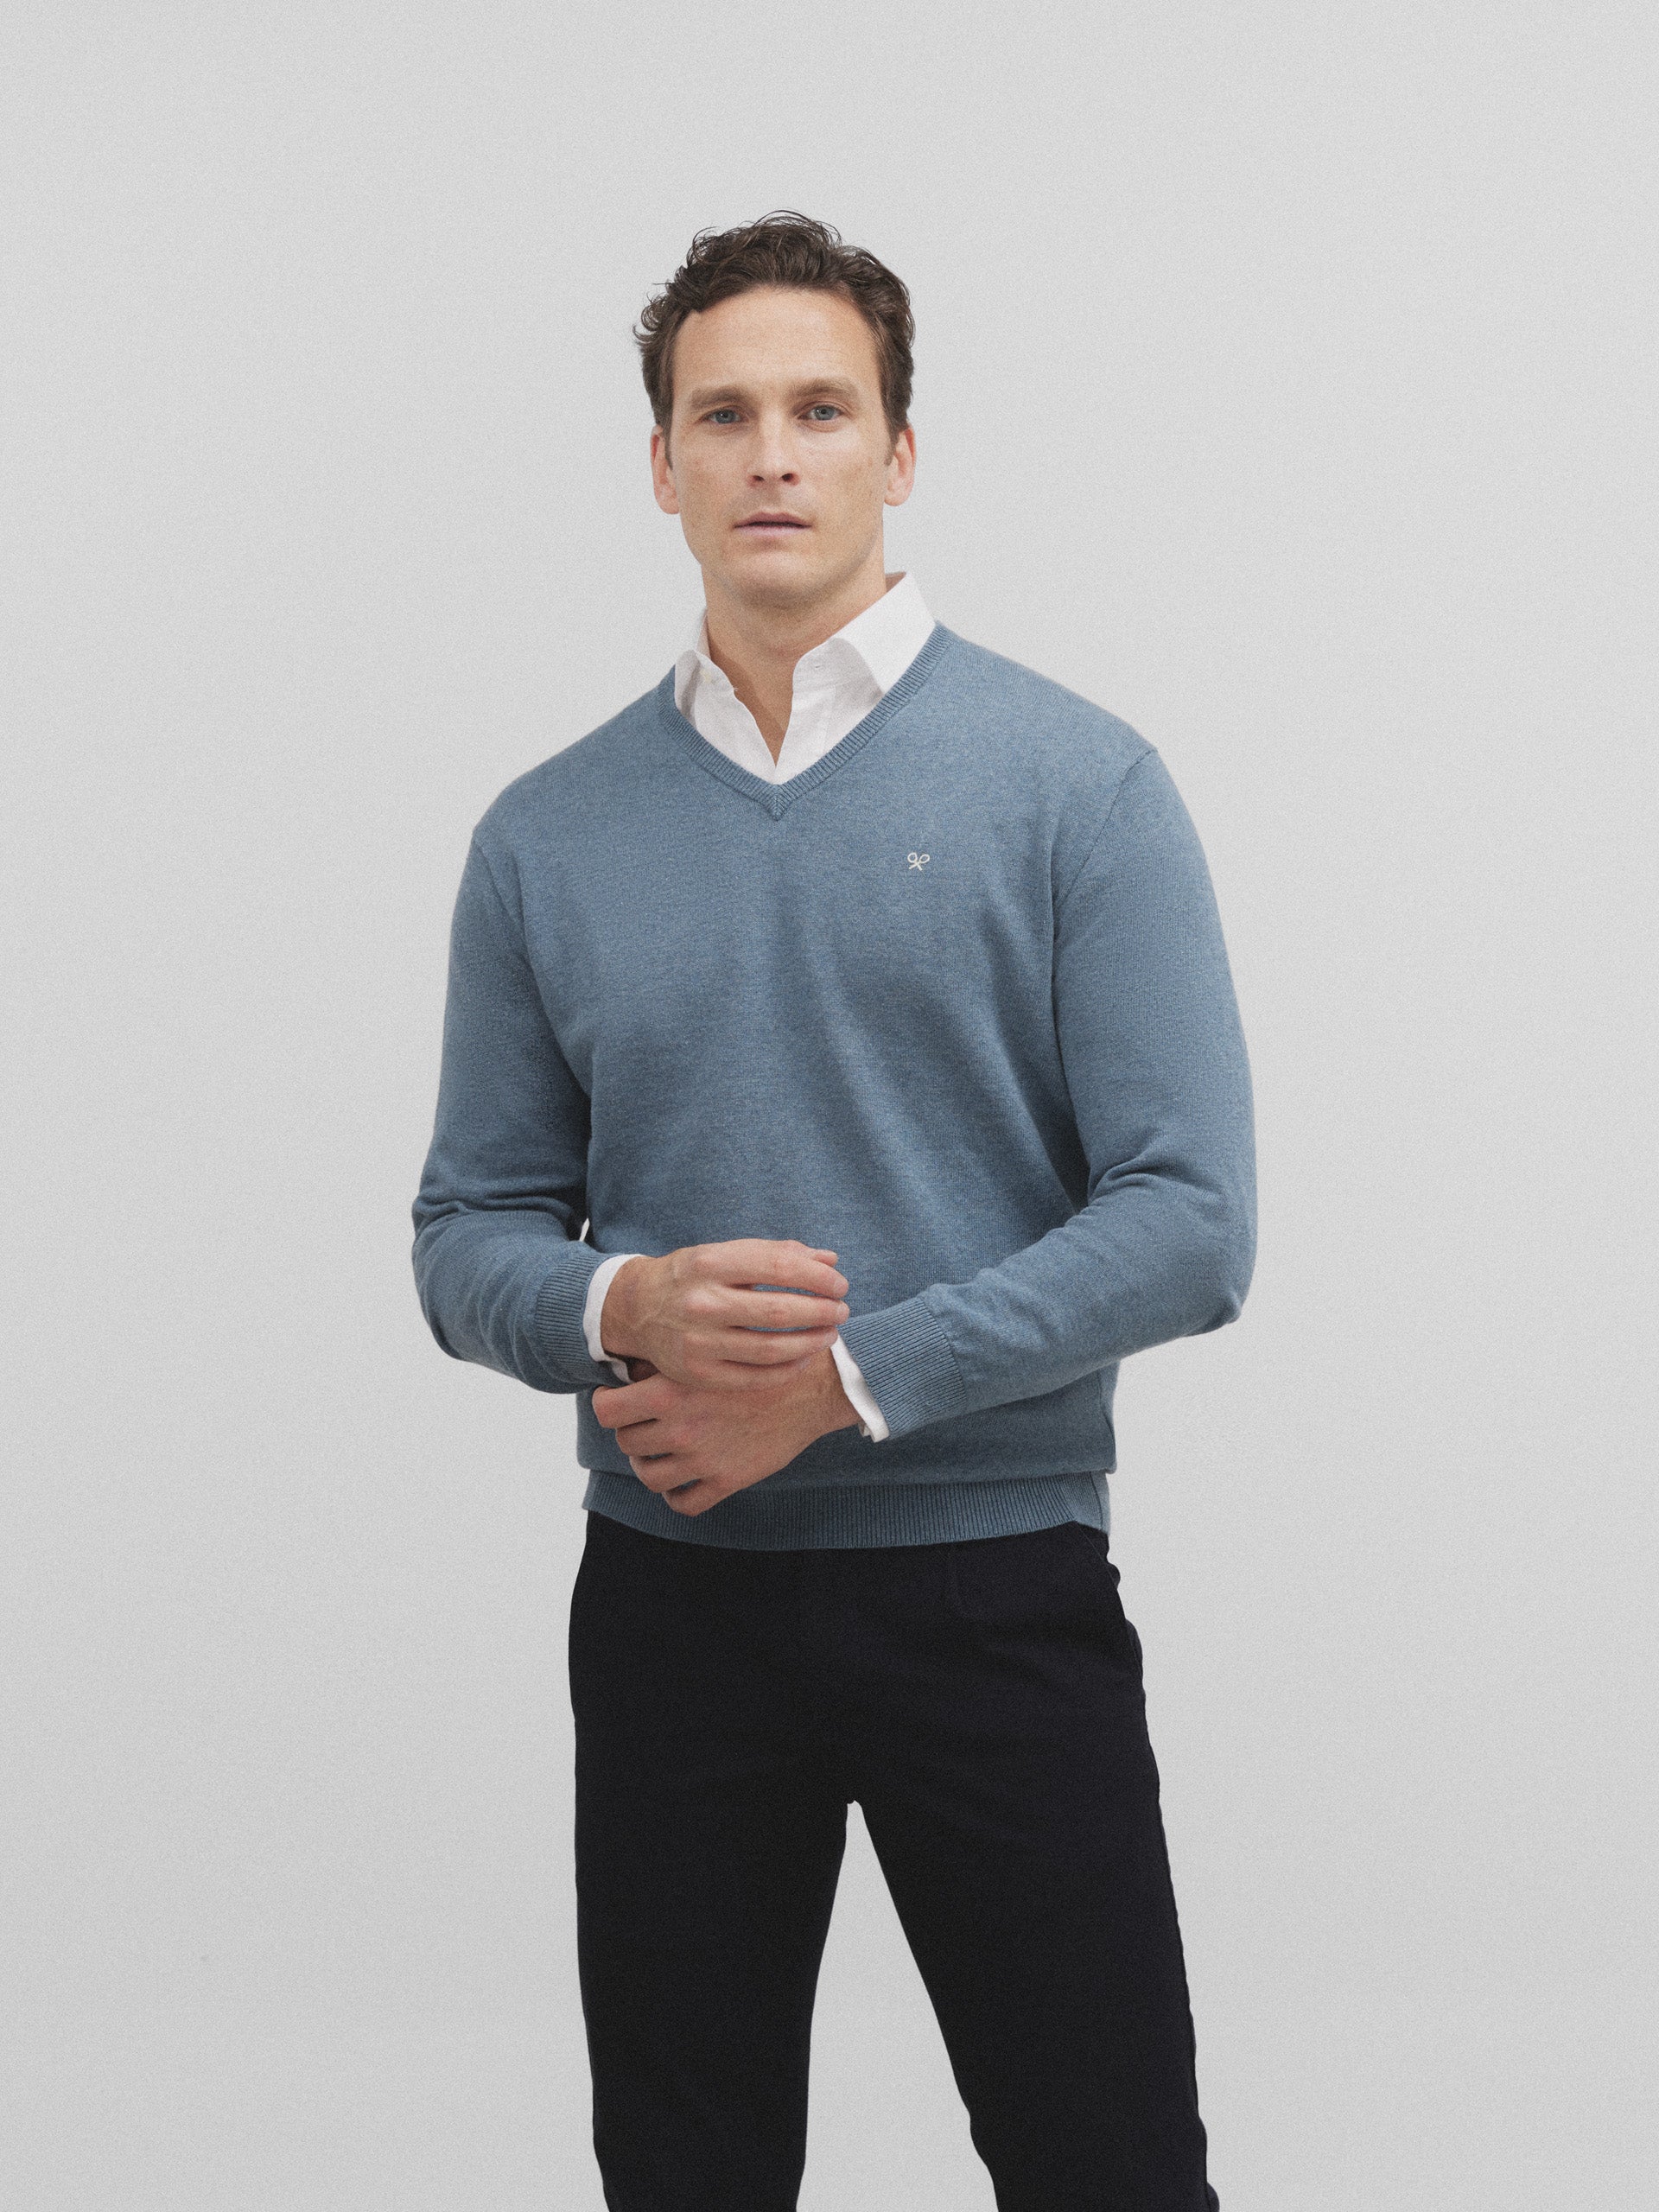 Gray blue v-neck sweater